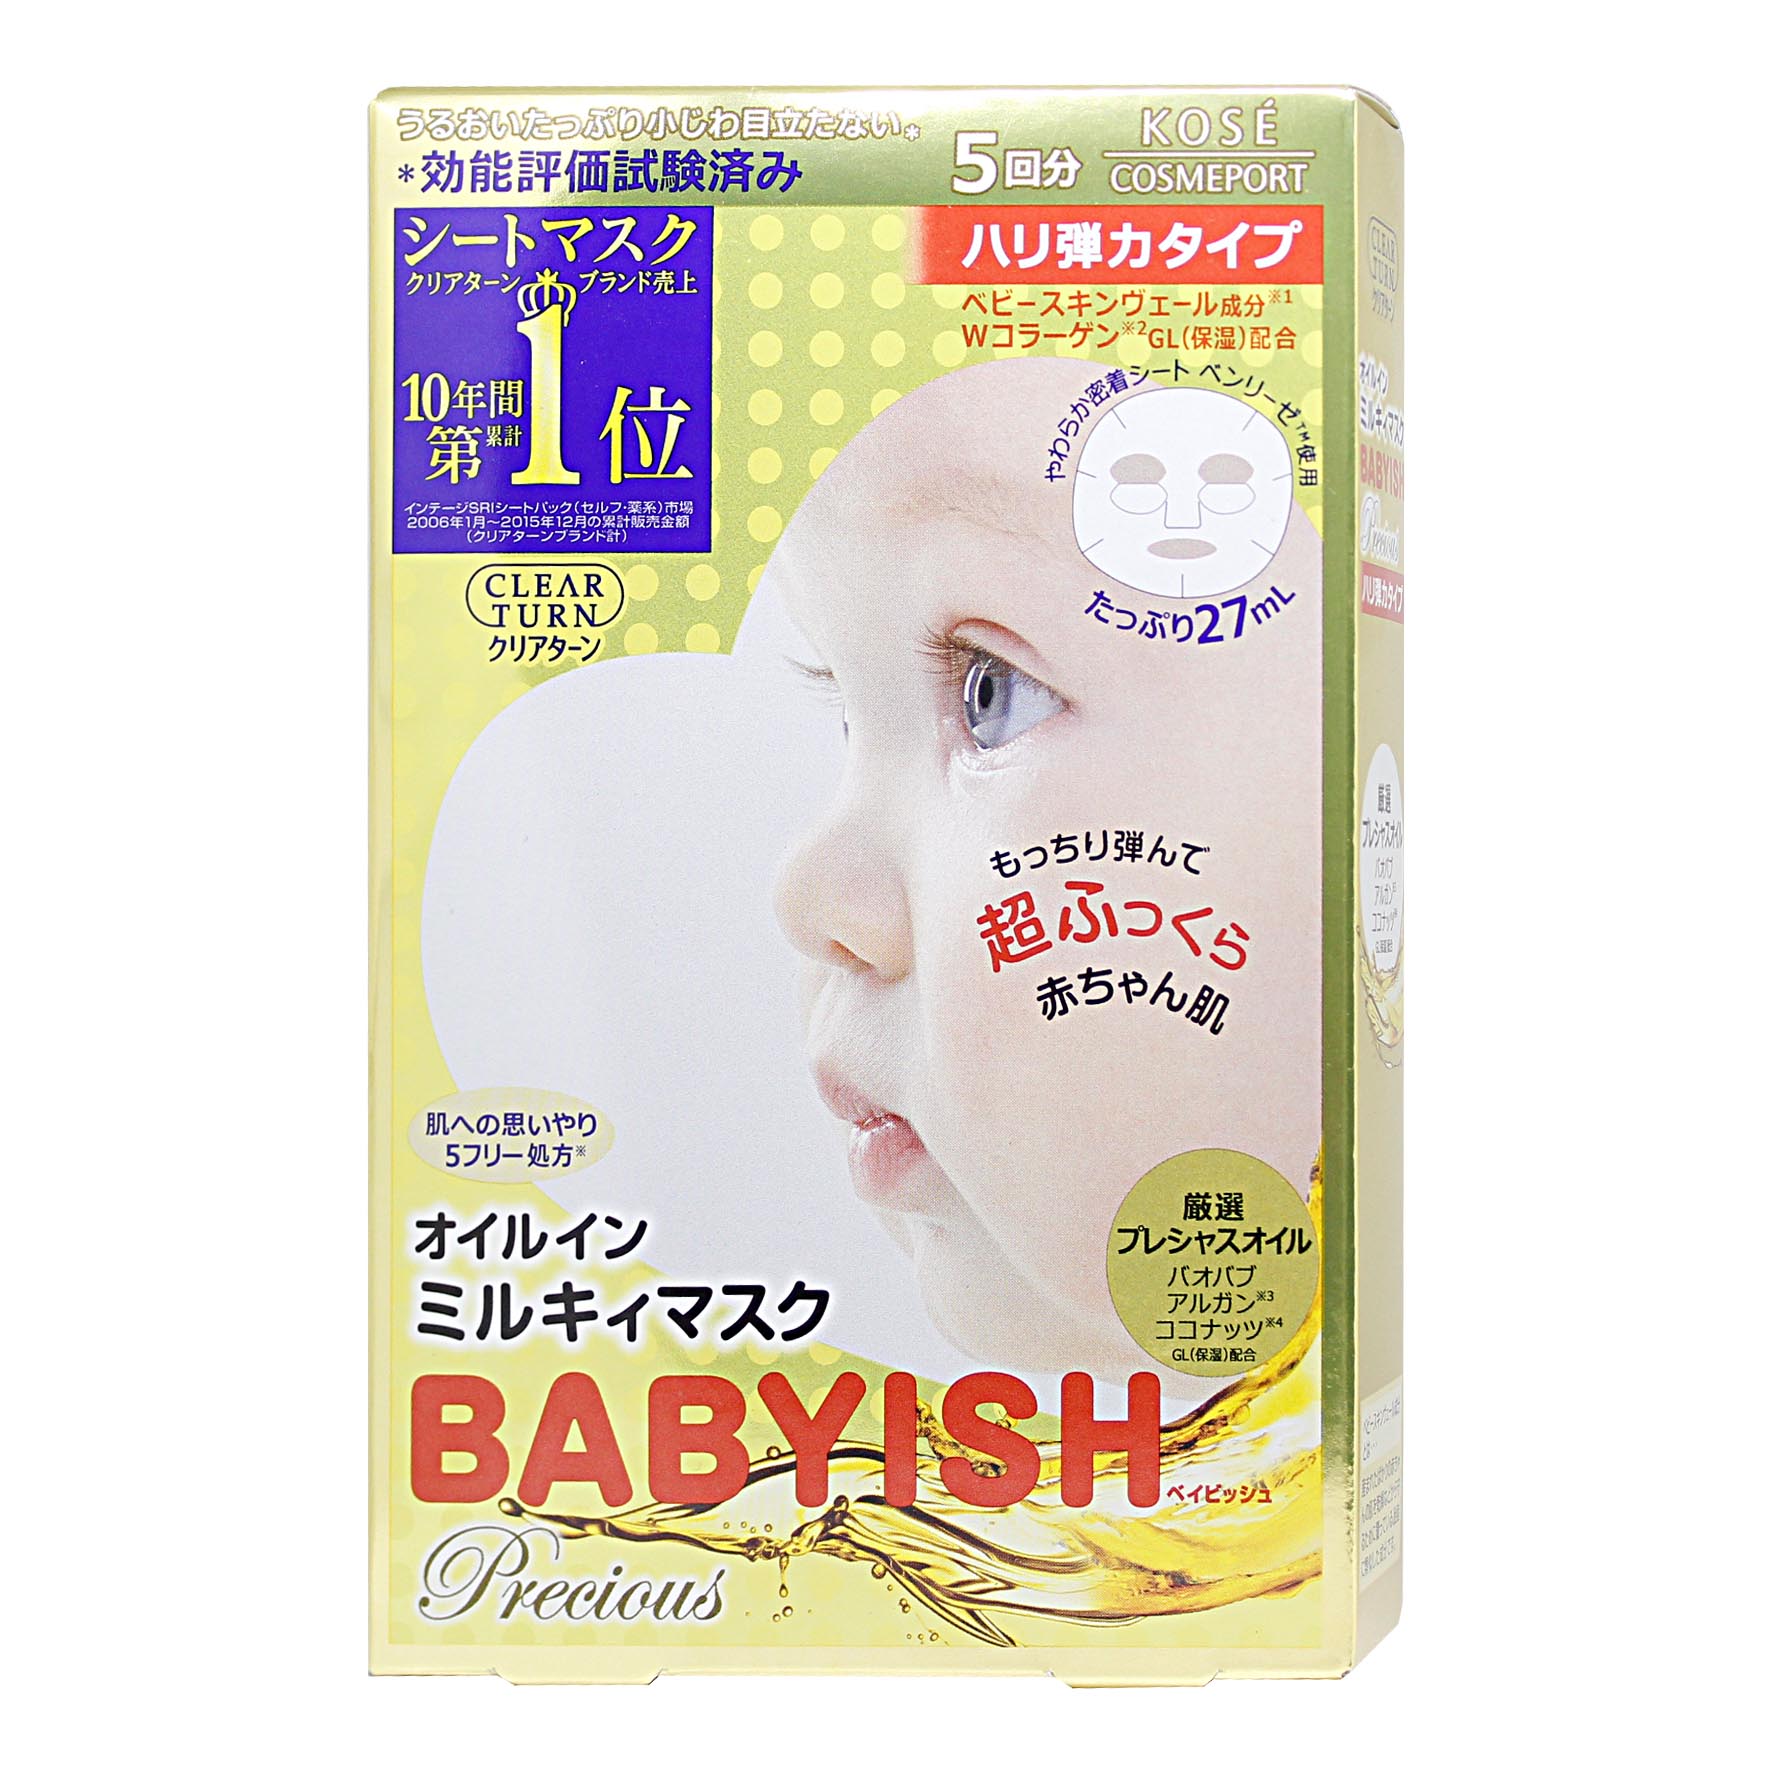 Kose Cosmeport Kose Clear Turn Babyish Precious Mask B